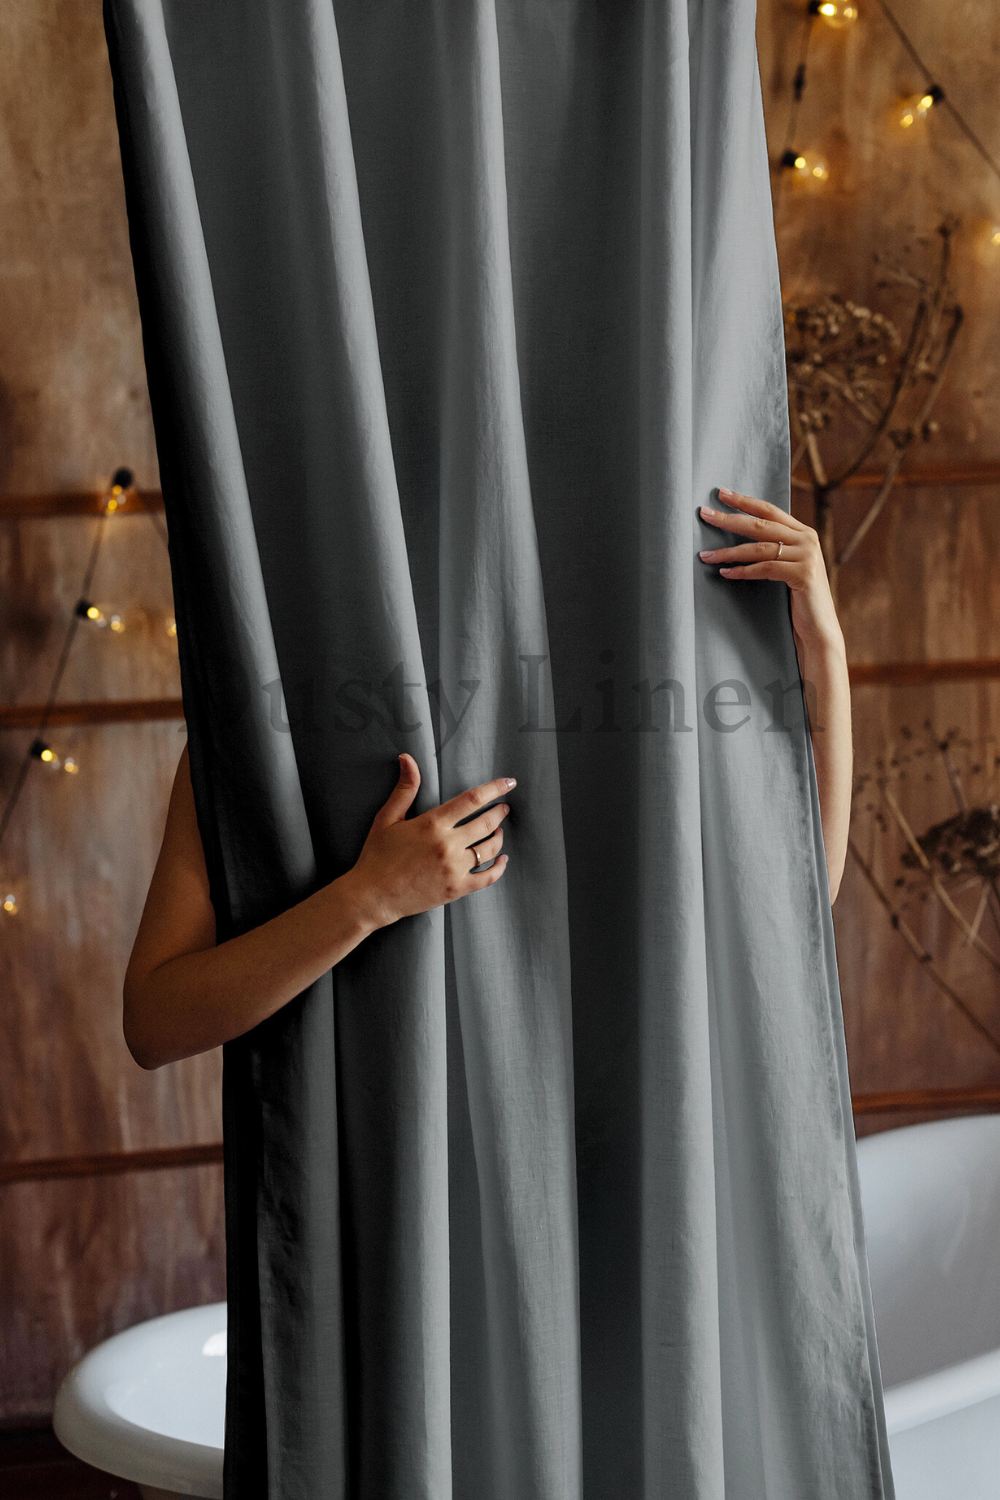 Best housewarming gift - Bathroom decoration with Dusty Linen gray color bathroom shower drape